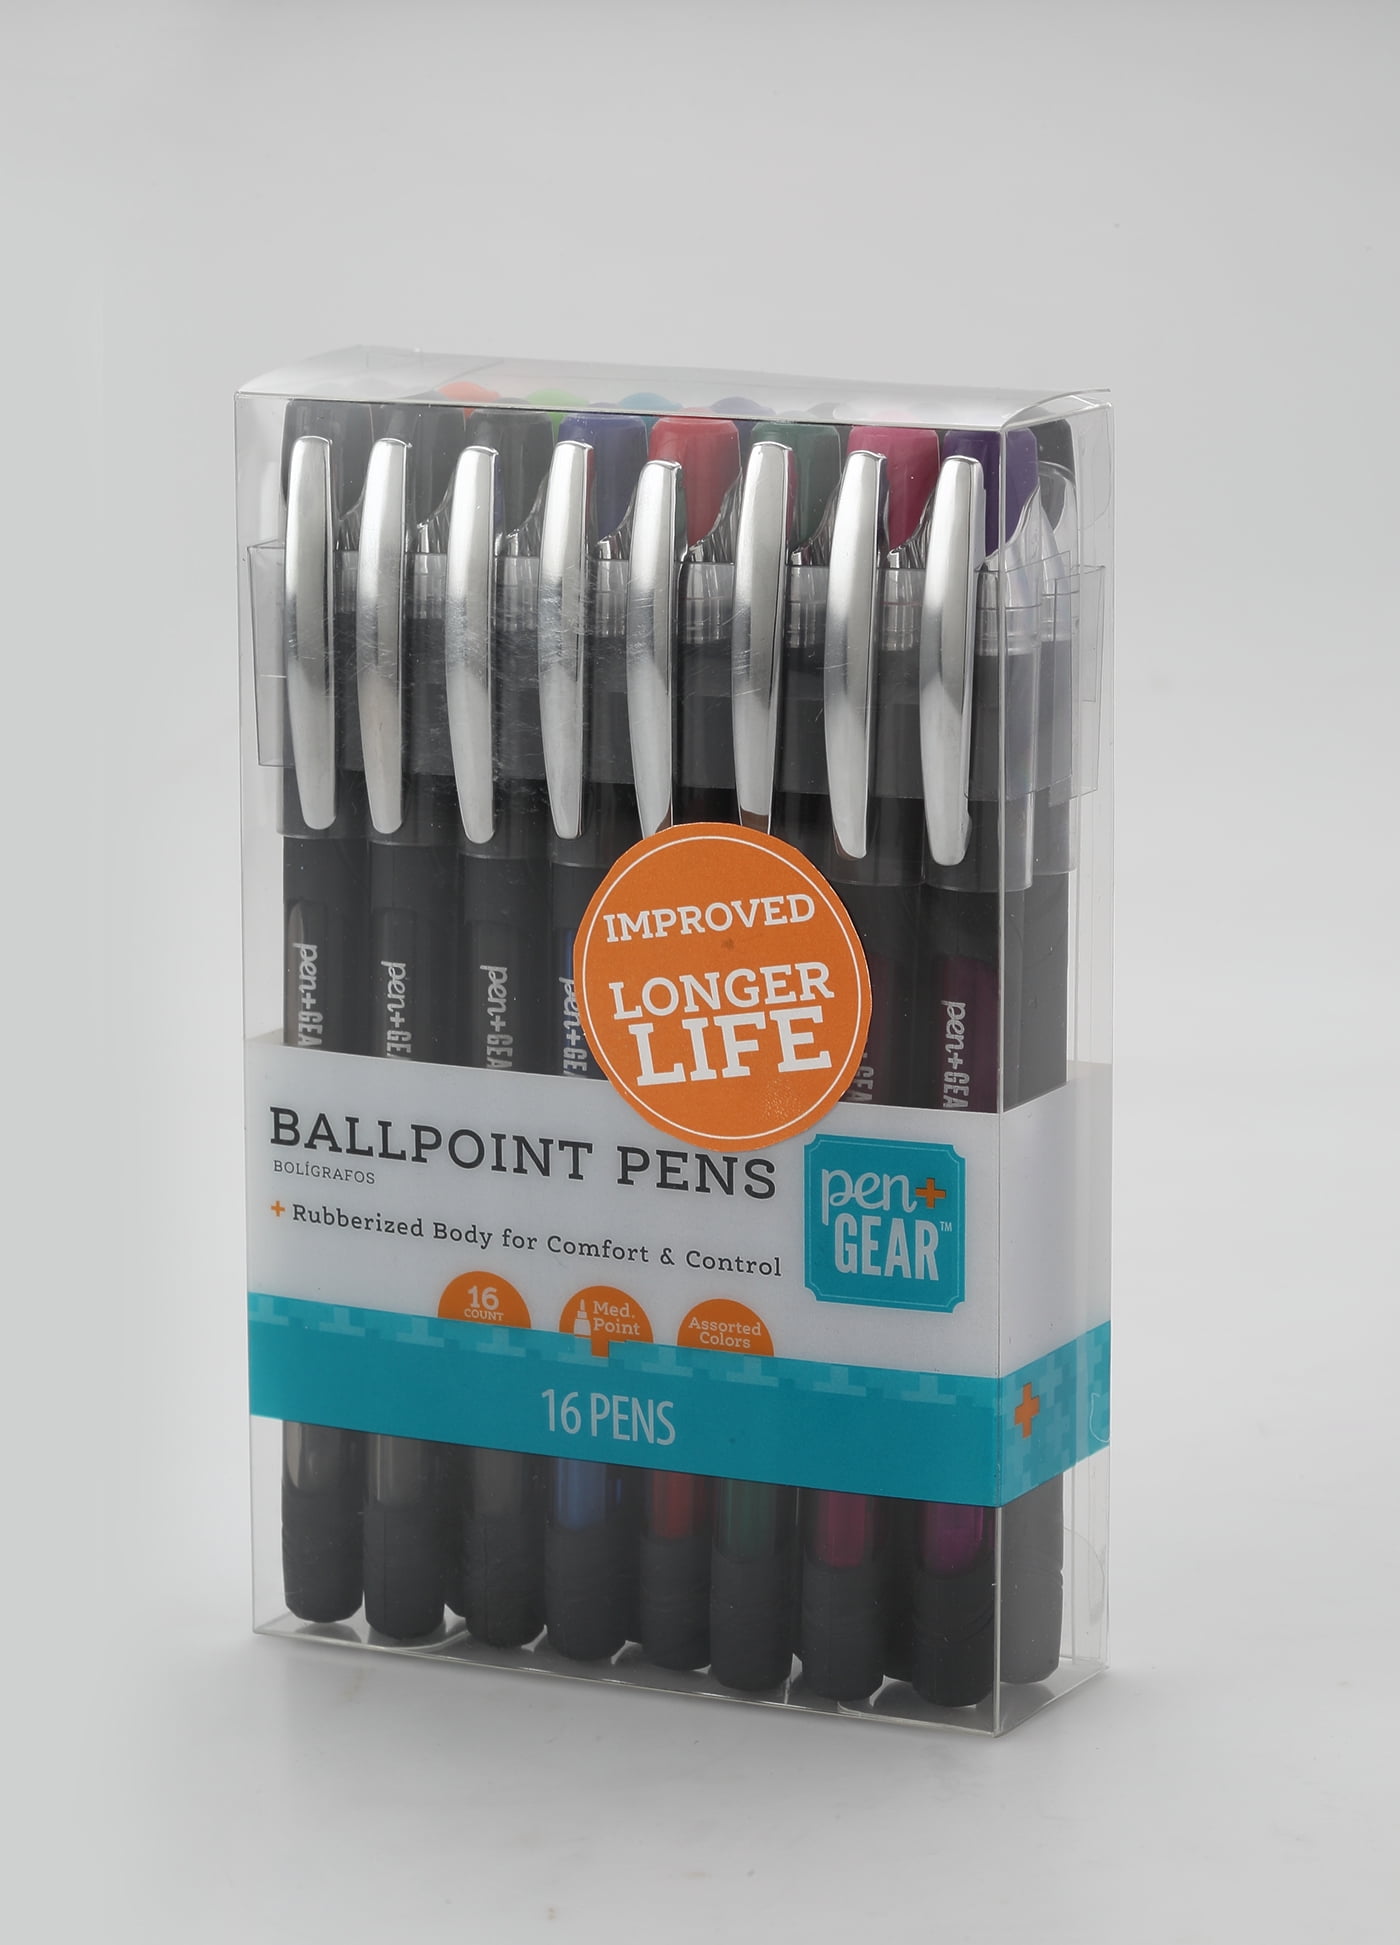 Pen + Gear Gel Stick Pens, Medium Point, 0.7 mm, Assorted Colors, 48-Count, 192511, Multicolor